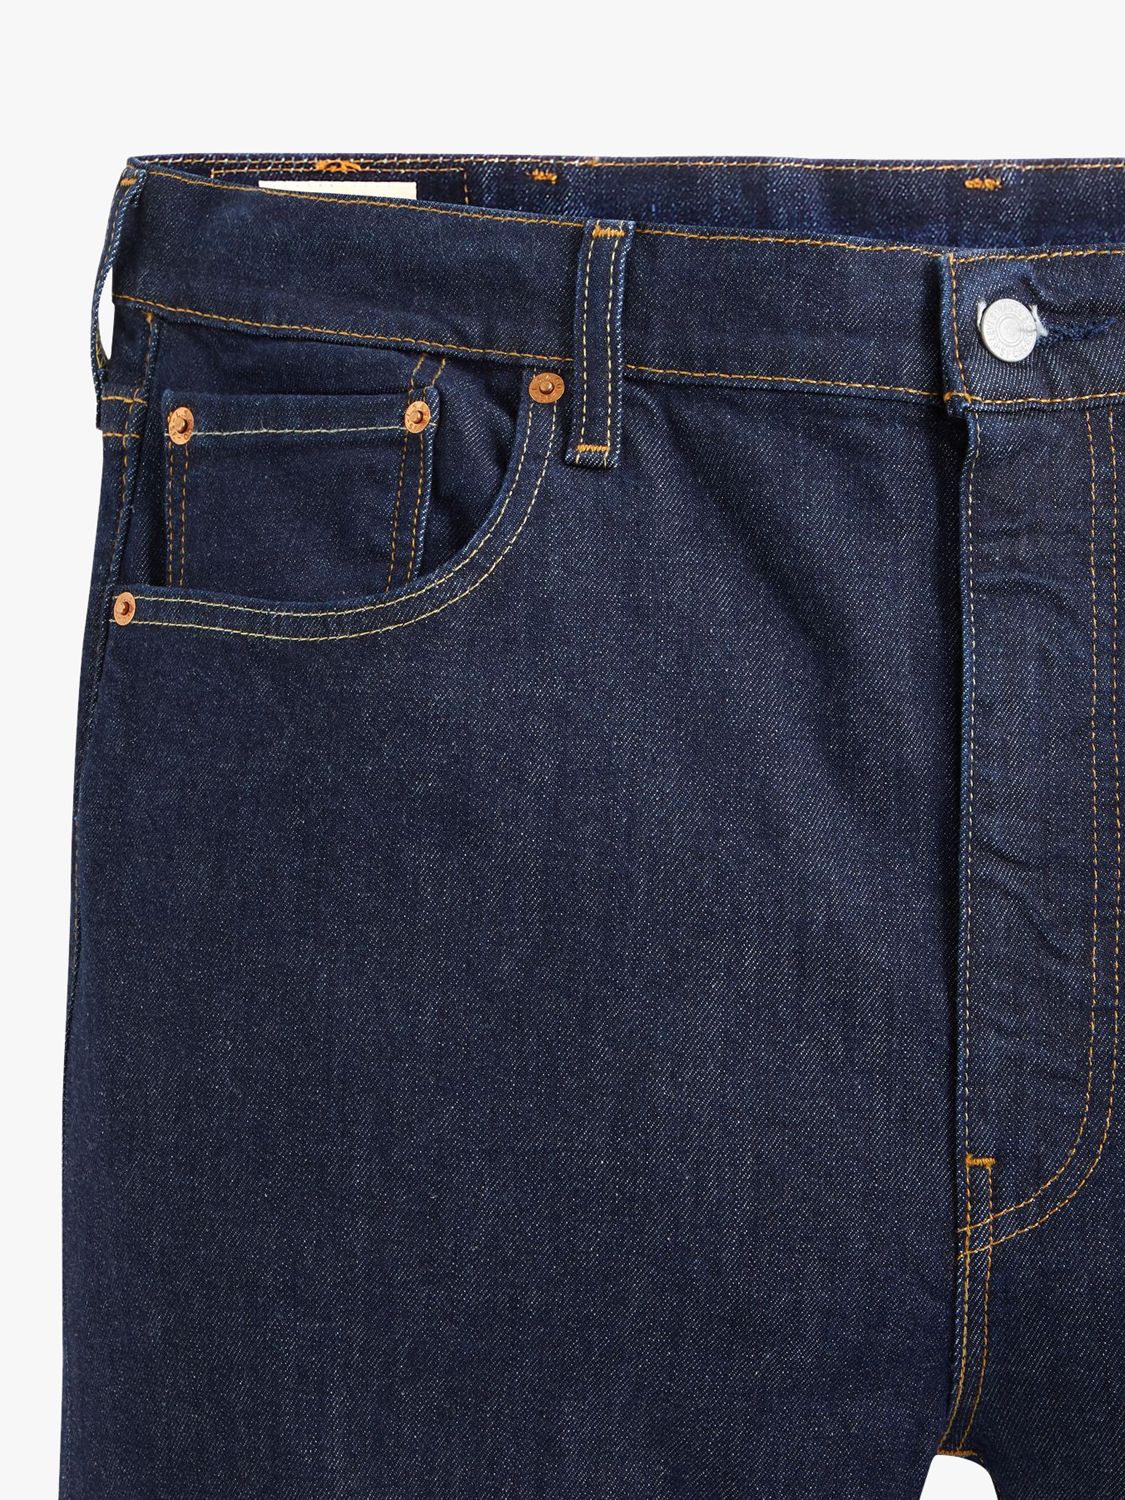 Levi's Big & Tall 512 Slim Tapered Jeans, Rock Cod at John Lewis & Partners